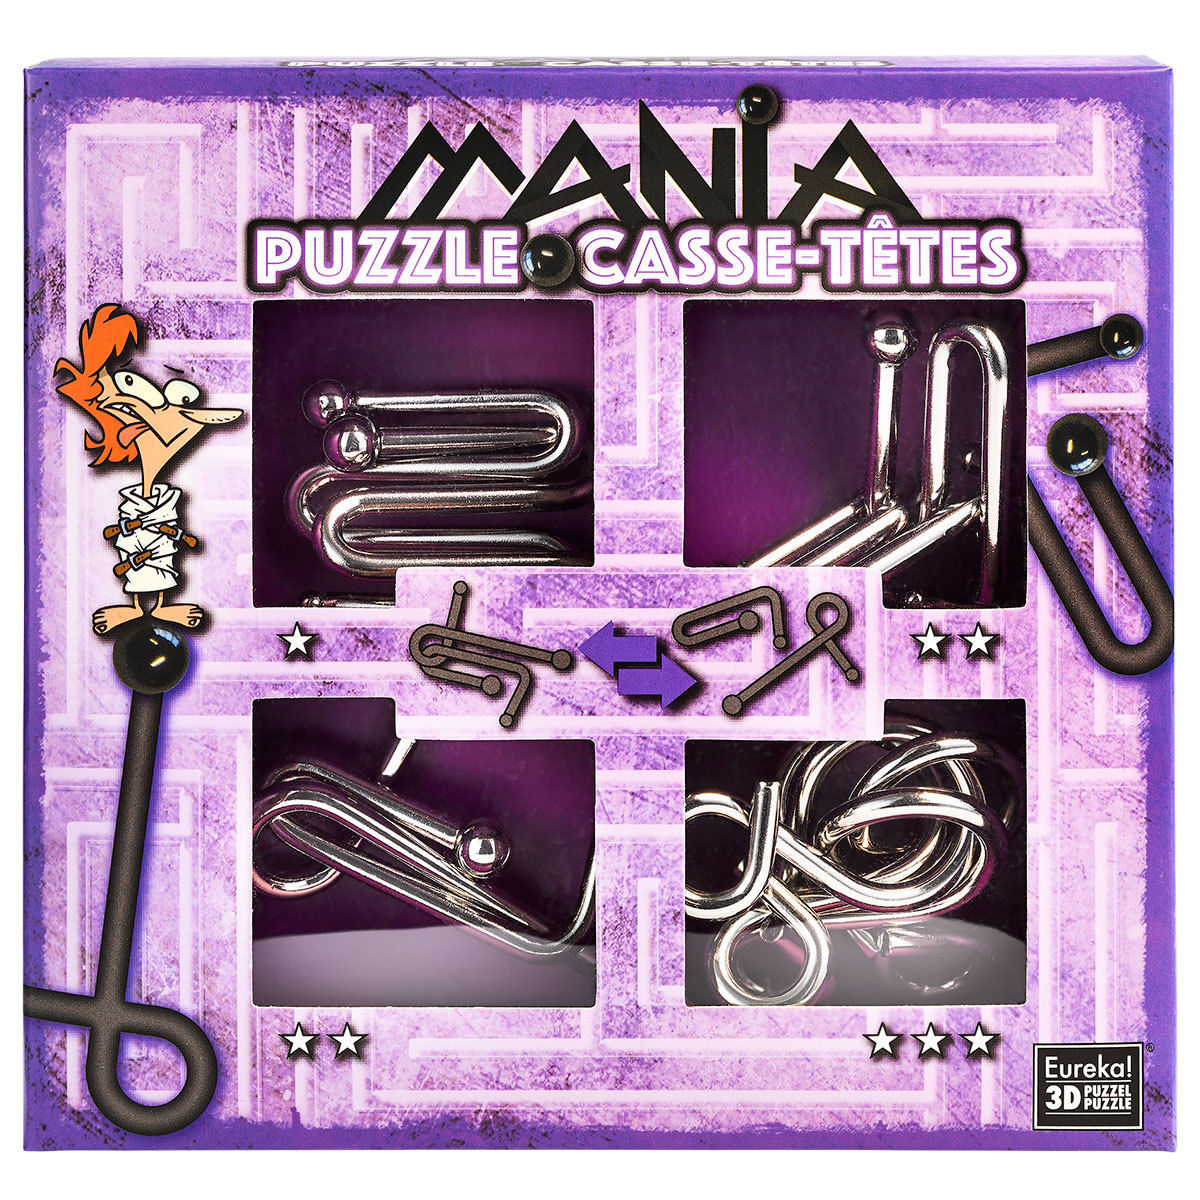 52473200 - Puzzle EUREKA Casse-têtes erhältlich) Lila Puzzle Display (nur Mania im